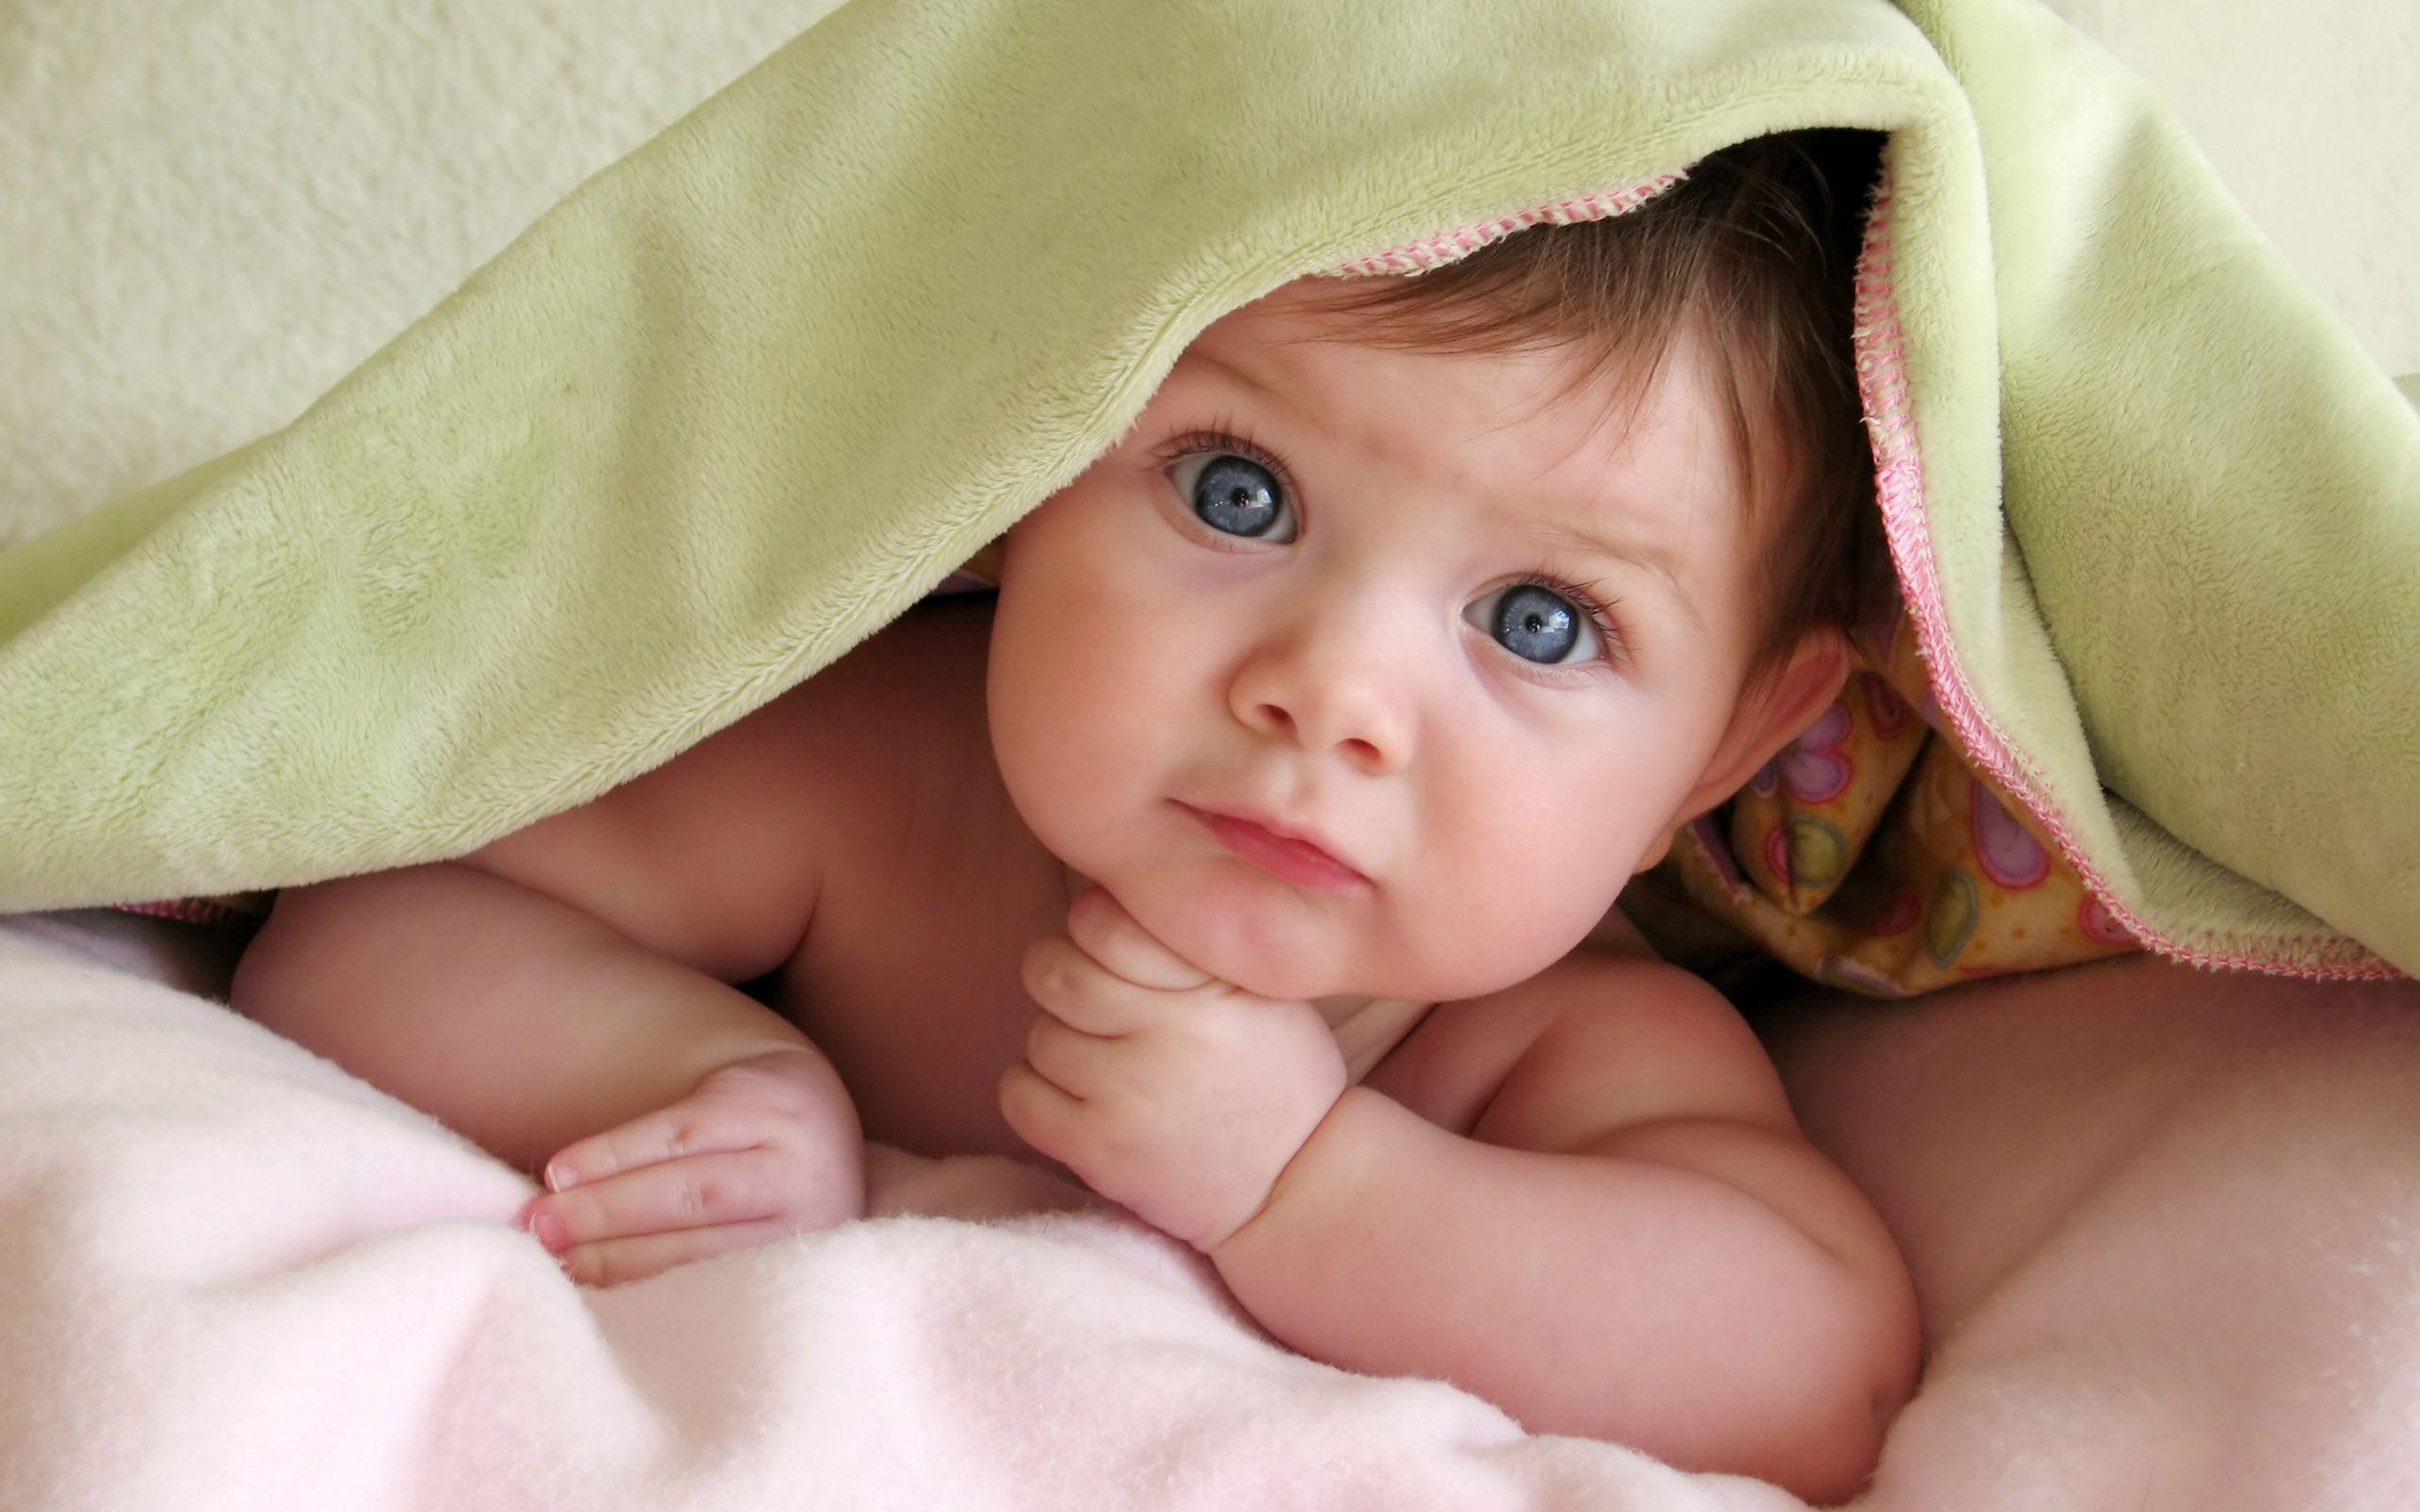 Best Cute Babies wallpaper, image, picture, in Hi